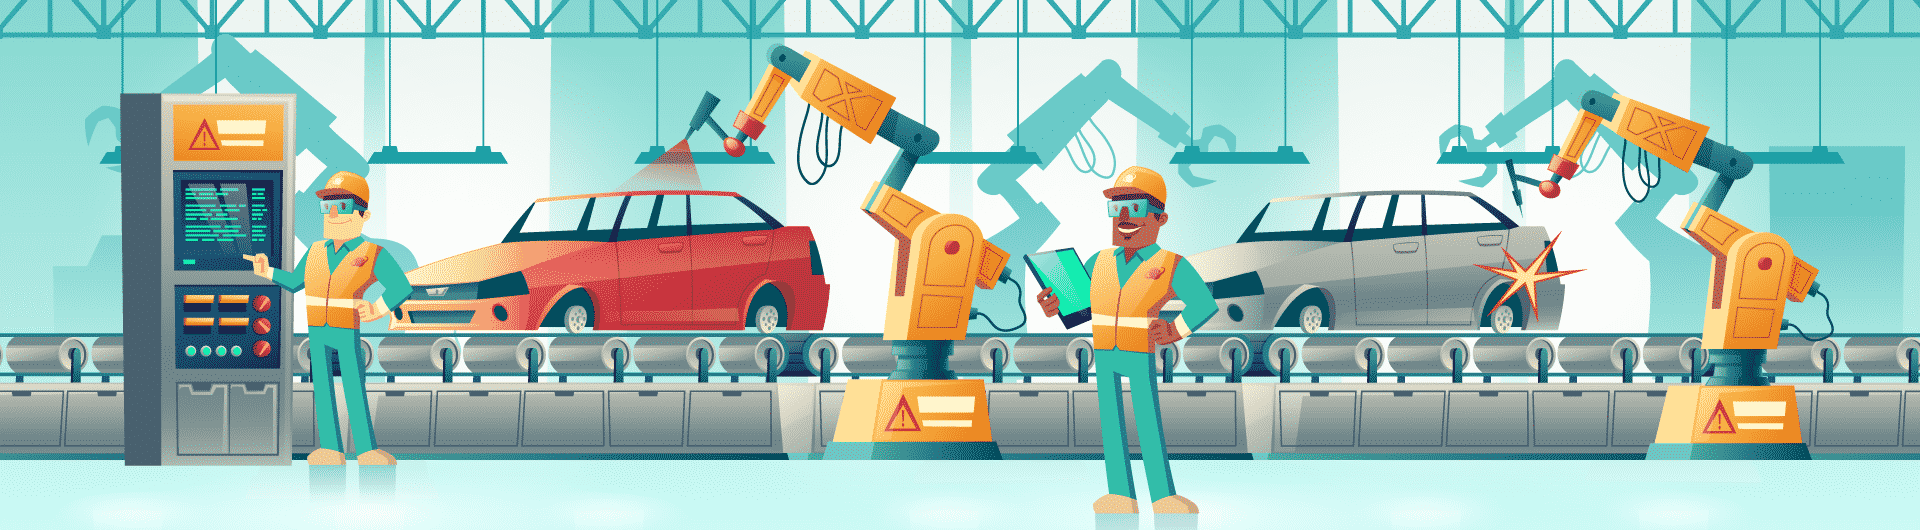 process-automation-car-factory